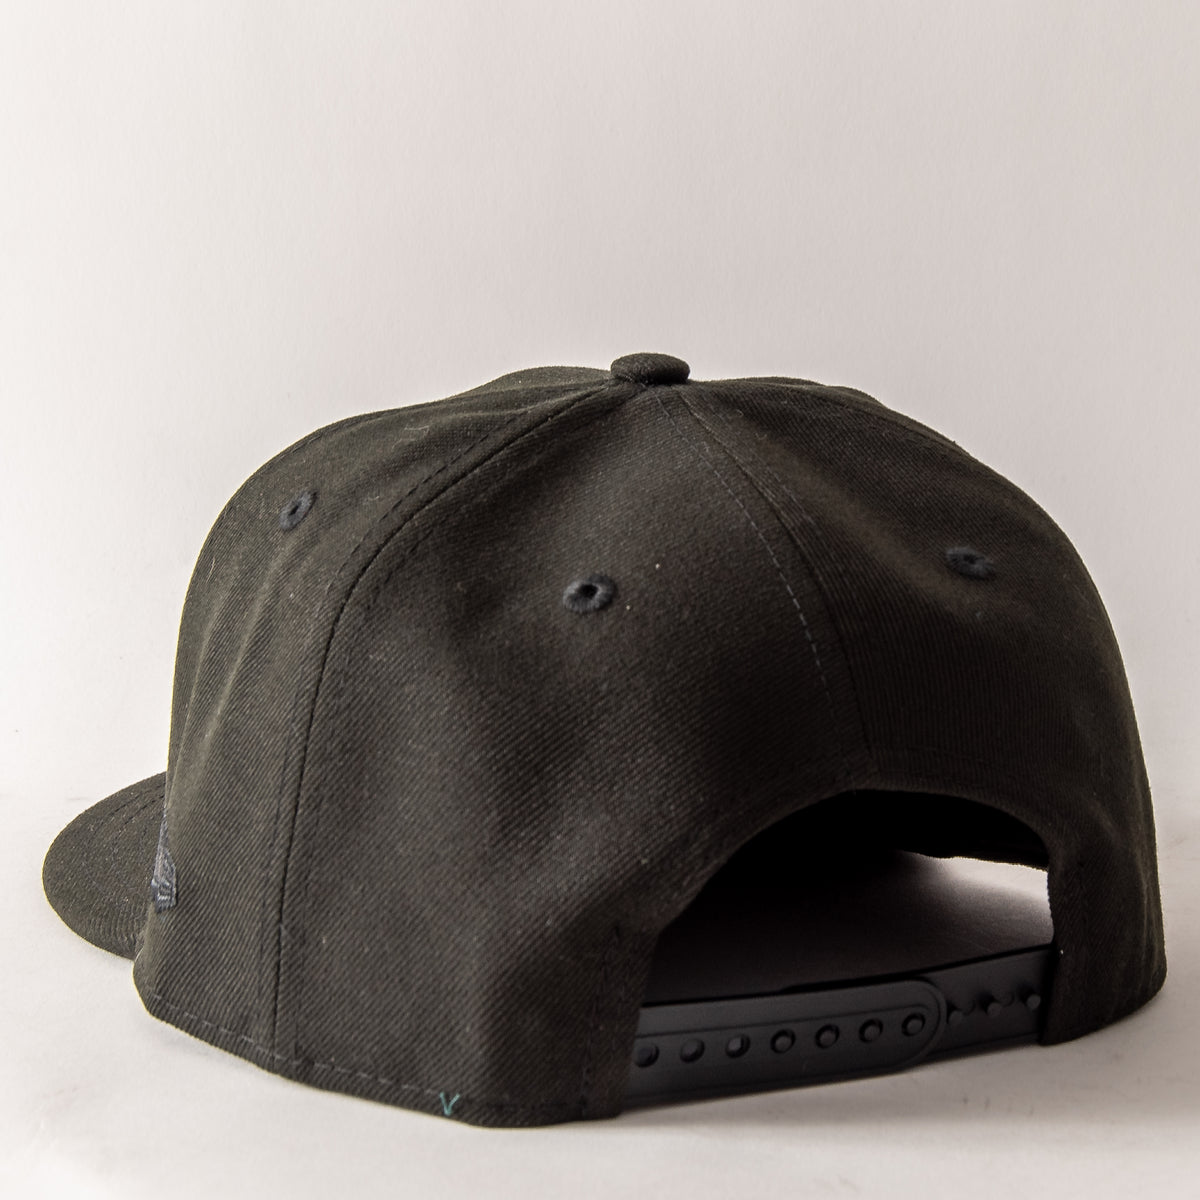 303 Boards - 303 Star New Era Trucker Hat (Black) *SALE